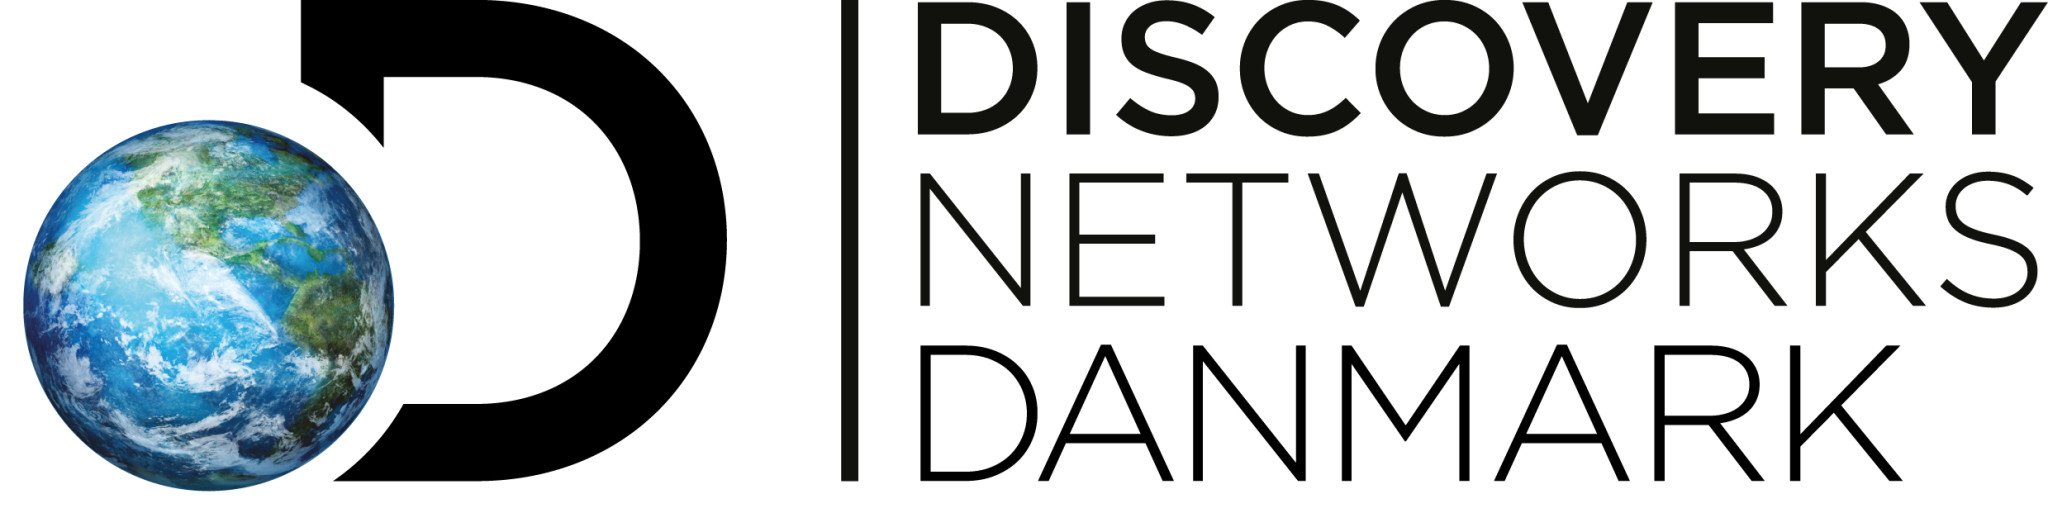 Discovery Networks logo Danmark